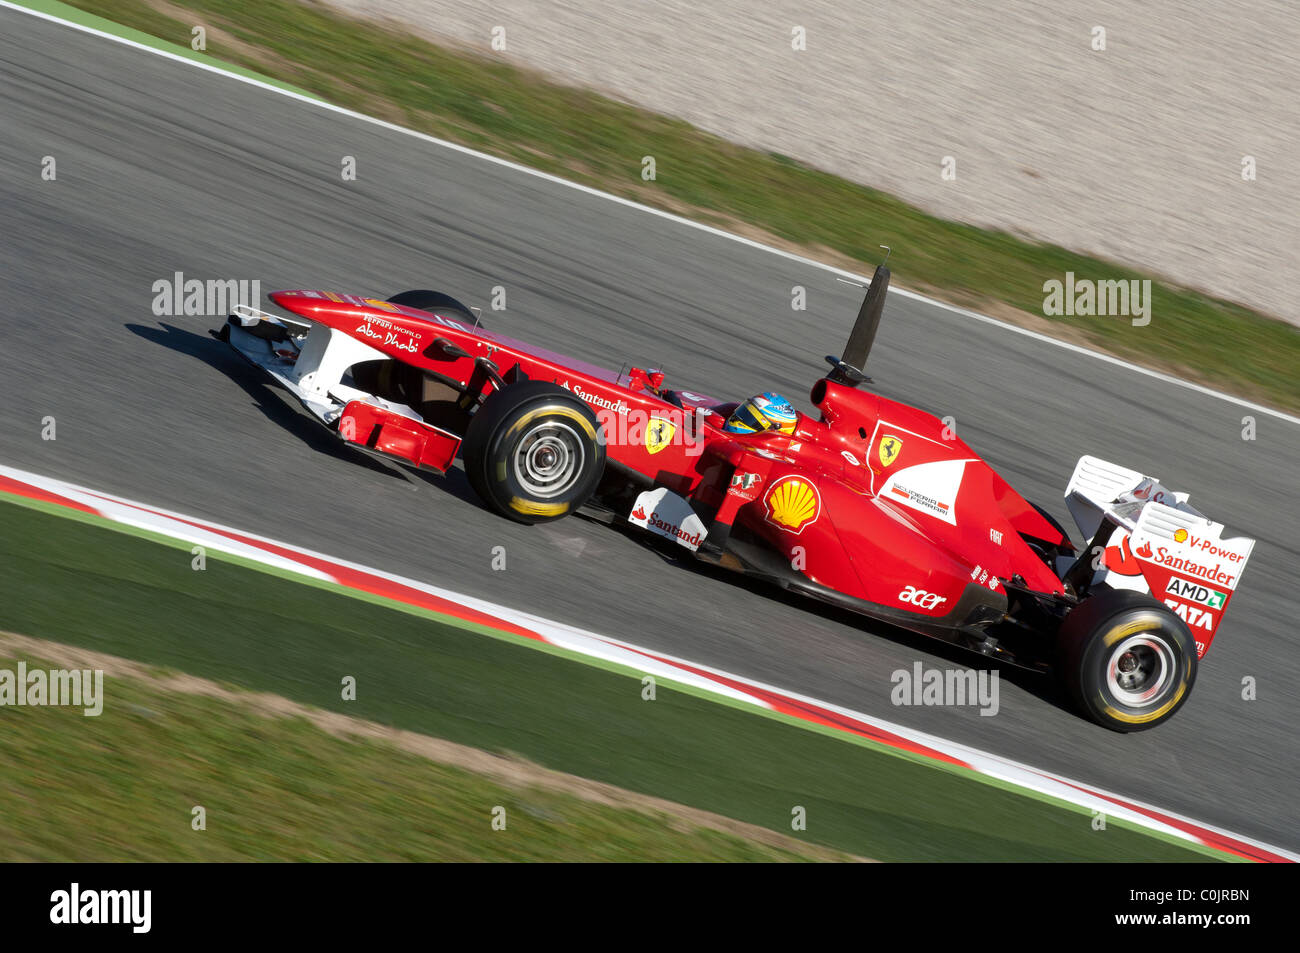 The cockpit of Fernando Alonso's 2012 Ferrari F1, illustrating the